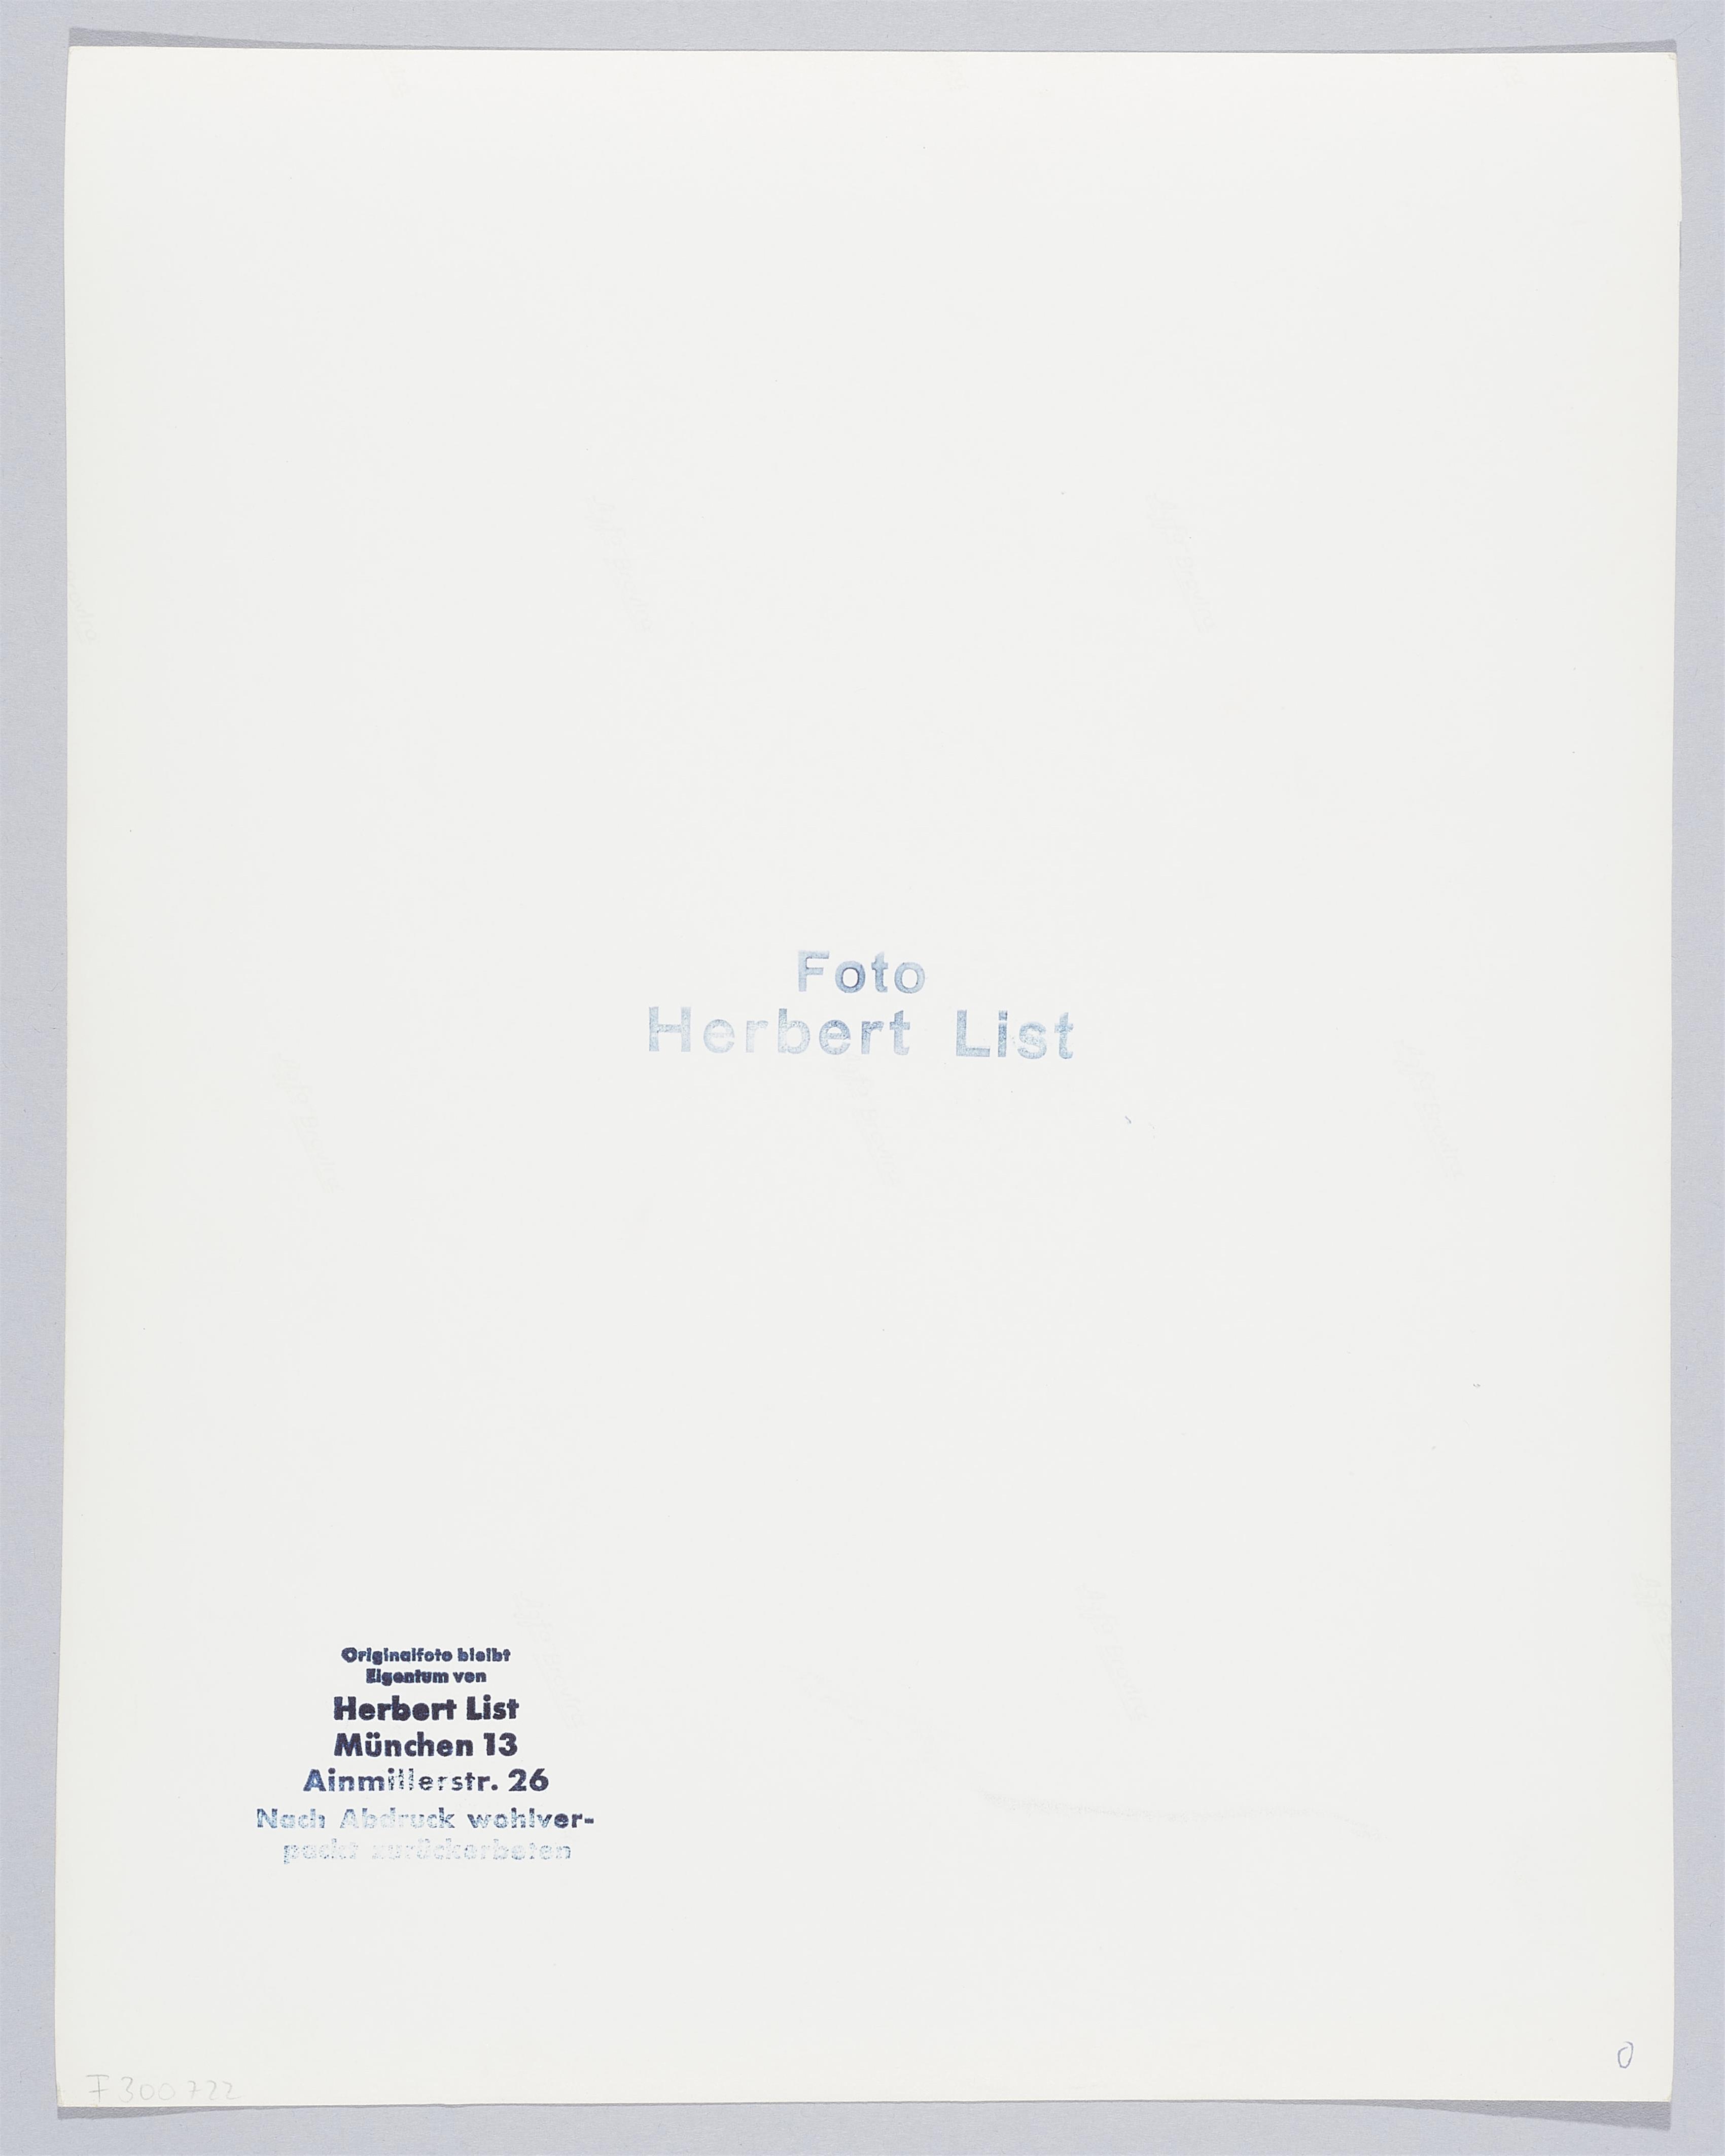 Herbert List - Untitled - image-2